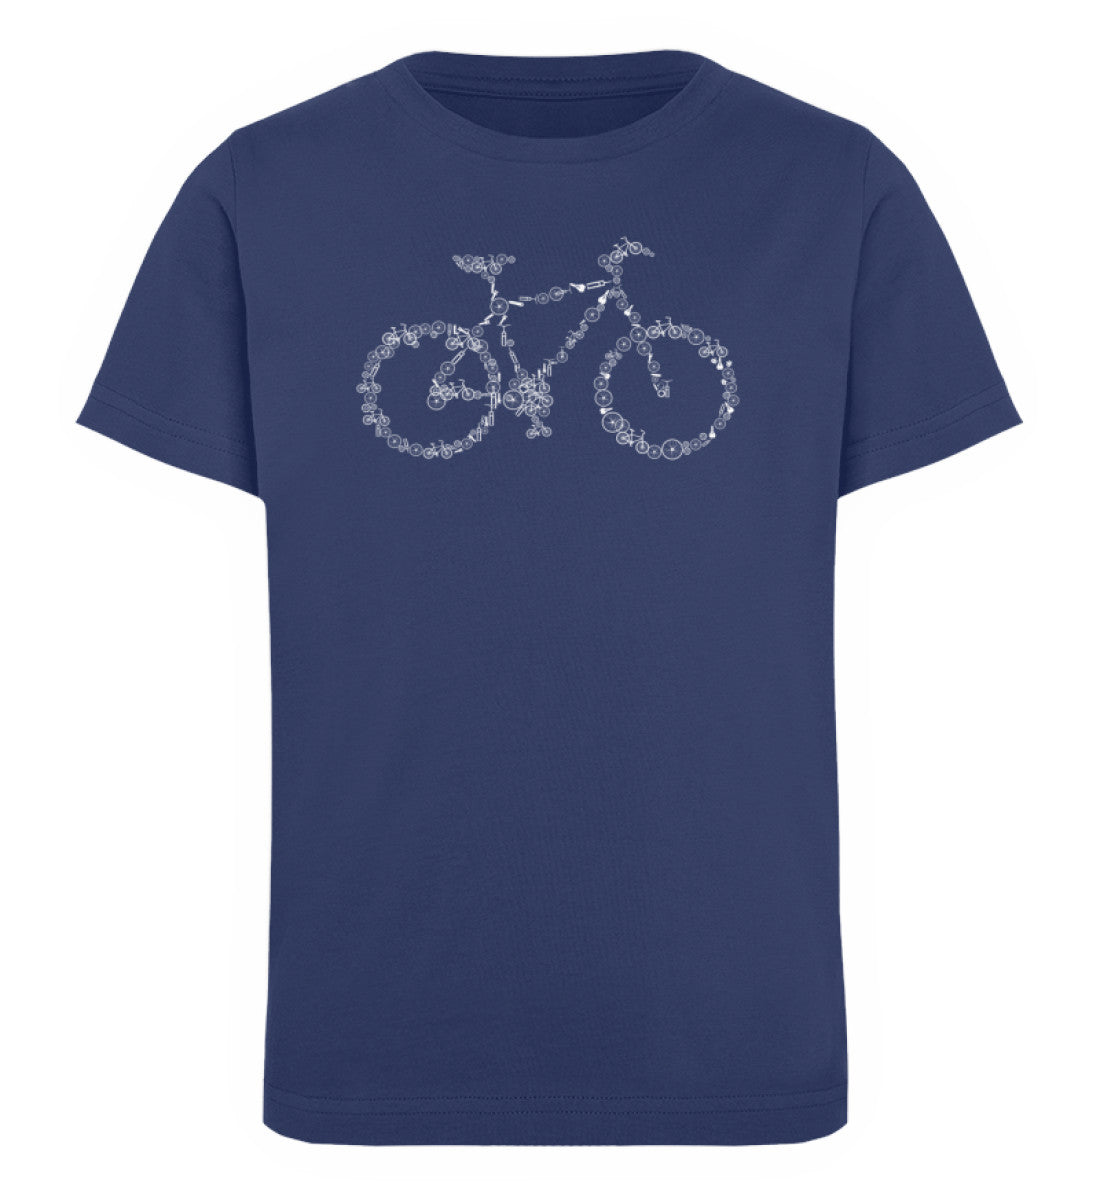 Fahrrad Kollektiv - Kinder Premium Organic T-Shirt fahrrad mountainbike Navyblau